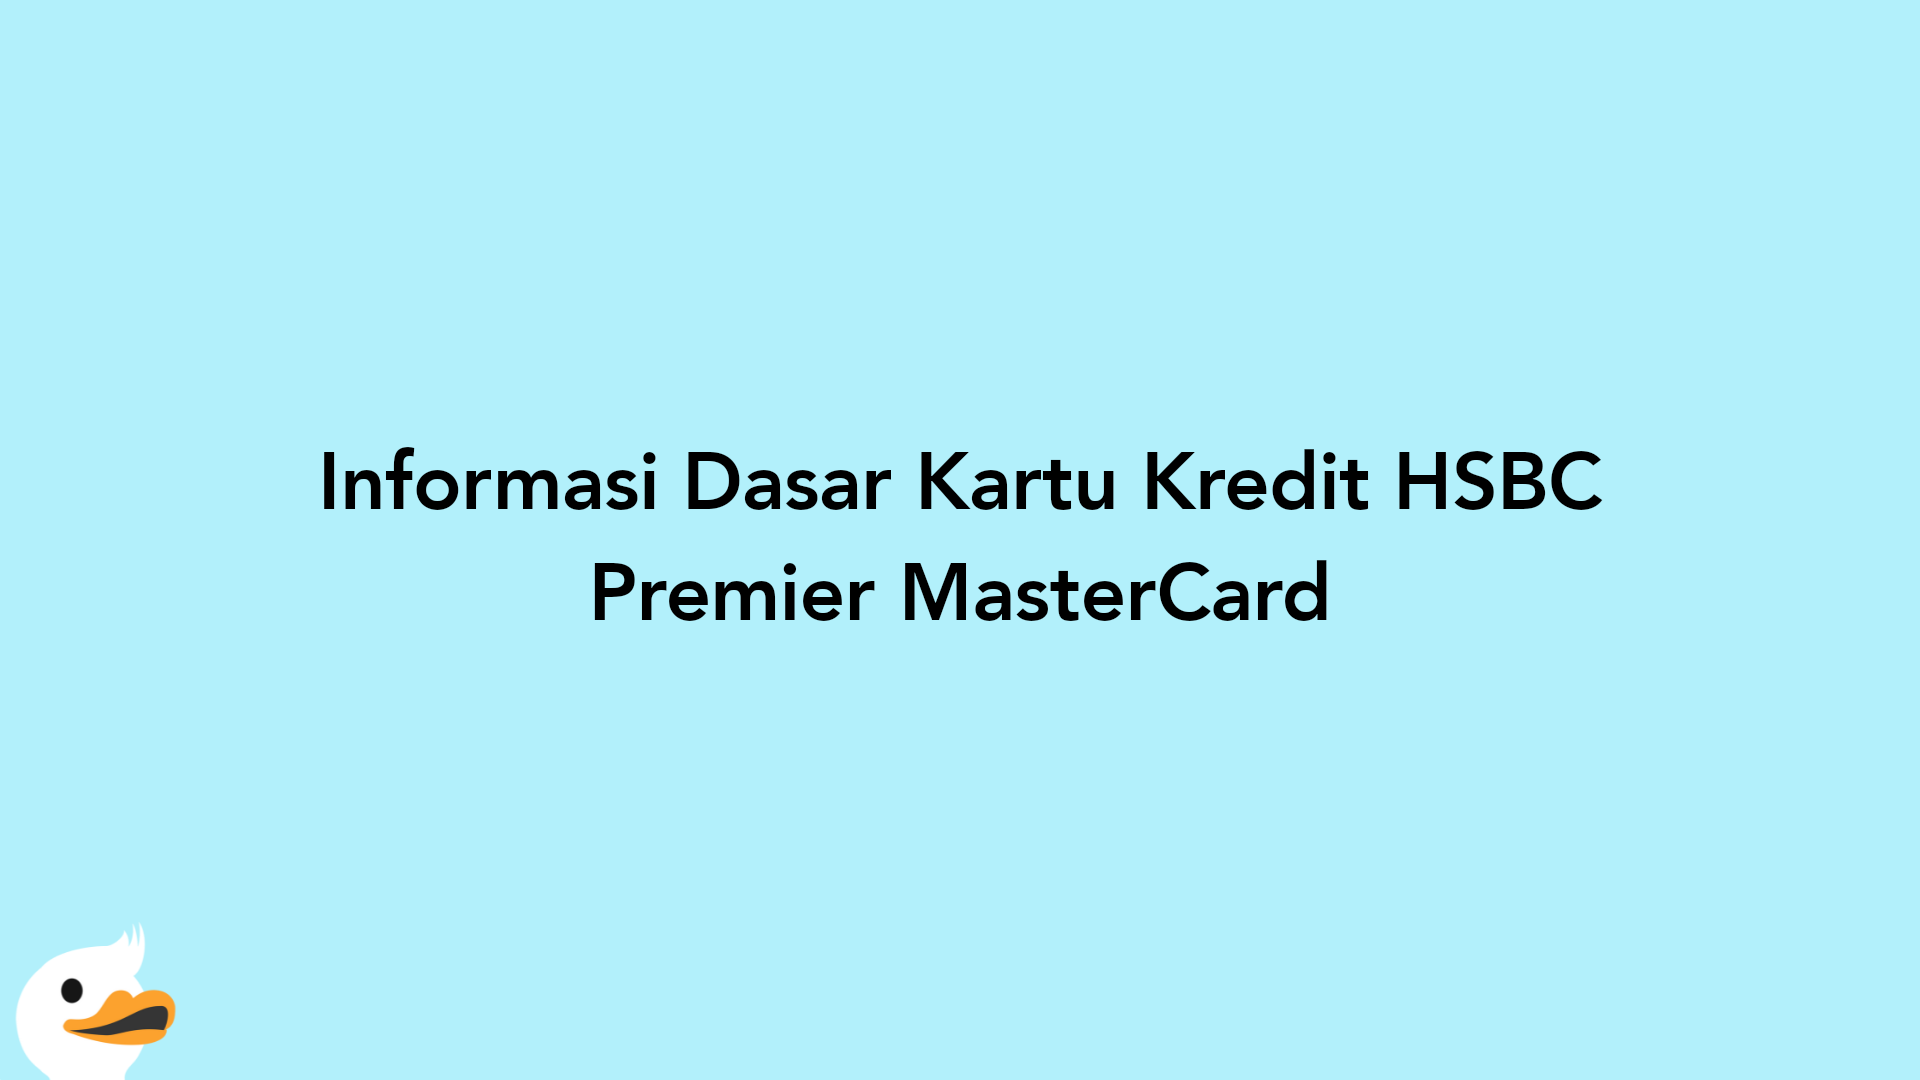 Informasi Dasar Kartu Kredit HSBC Premier MasterCard